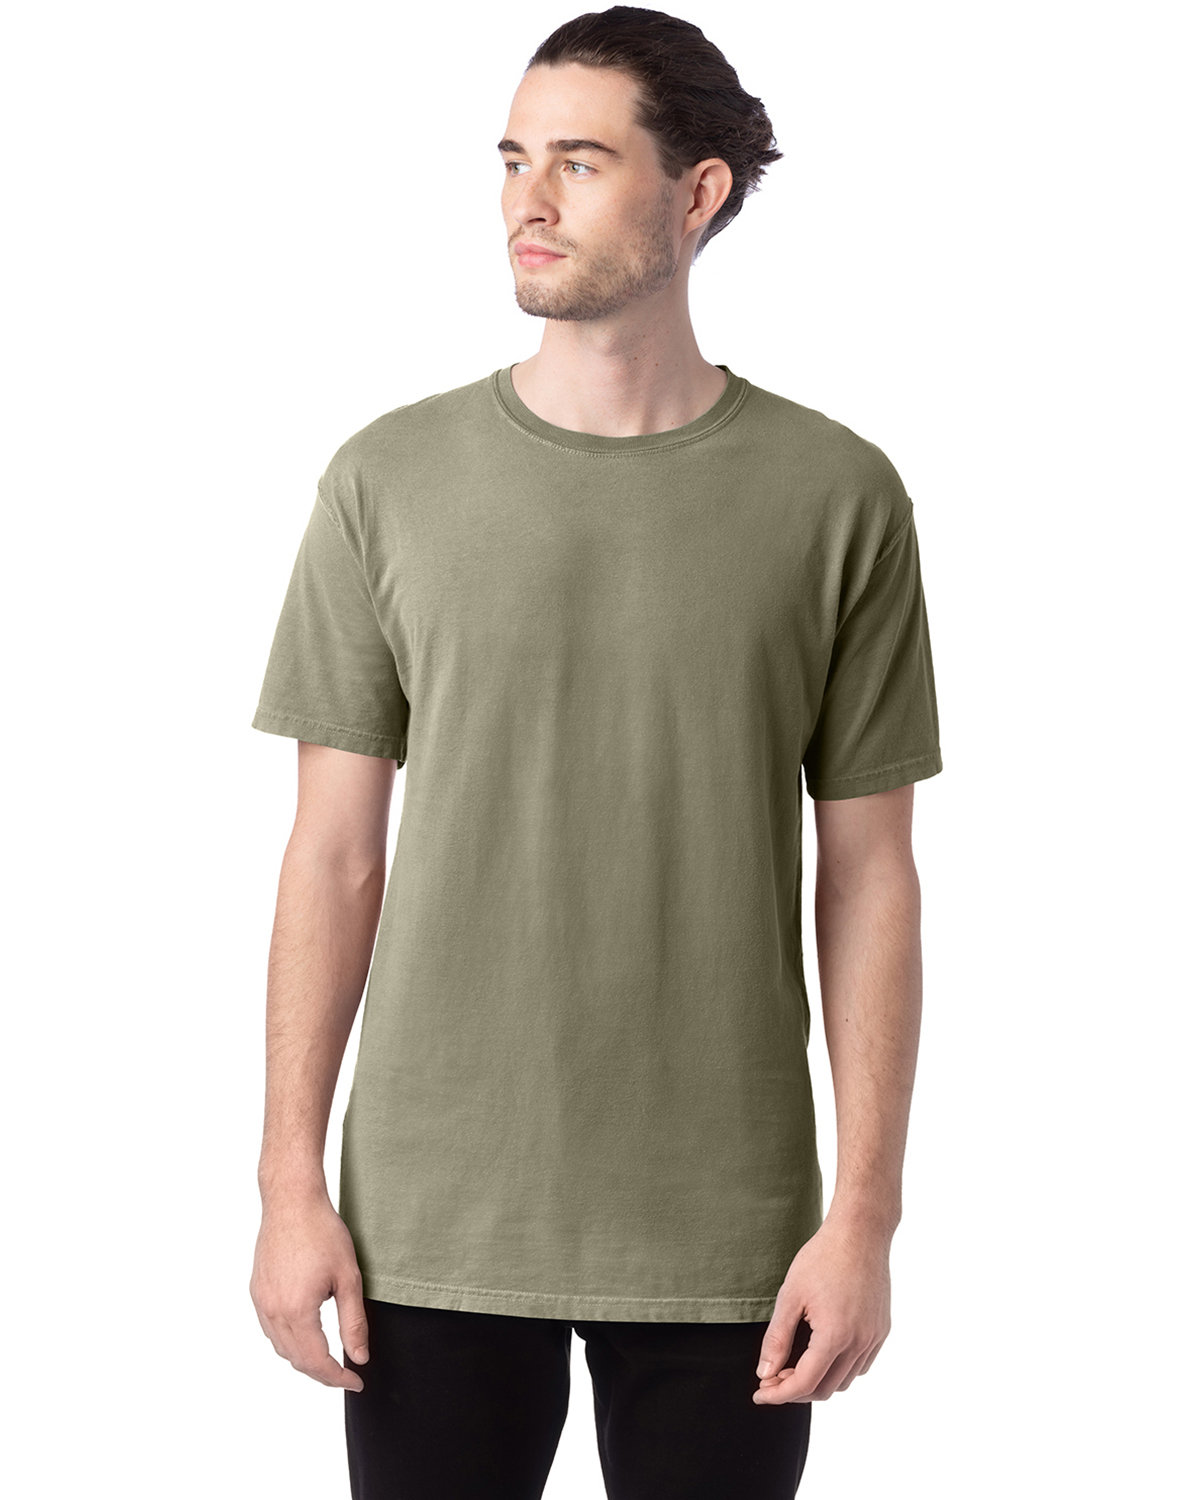 ShirtSpace Cotton T-Shirt oz., by Men\'s ComfortWash Ringspun Hanes Garment-Dyed | 5.5 100% | GDH100